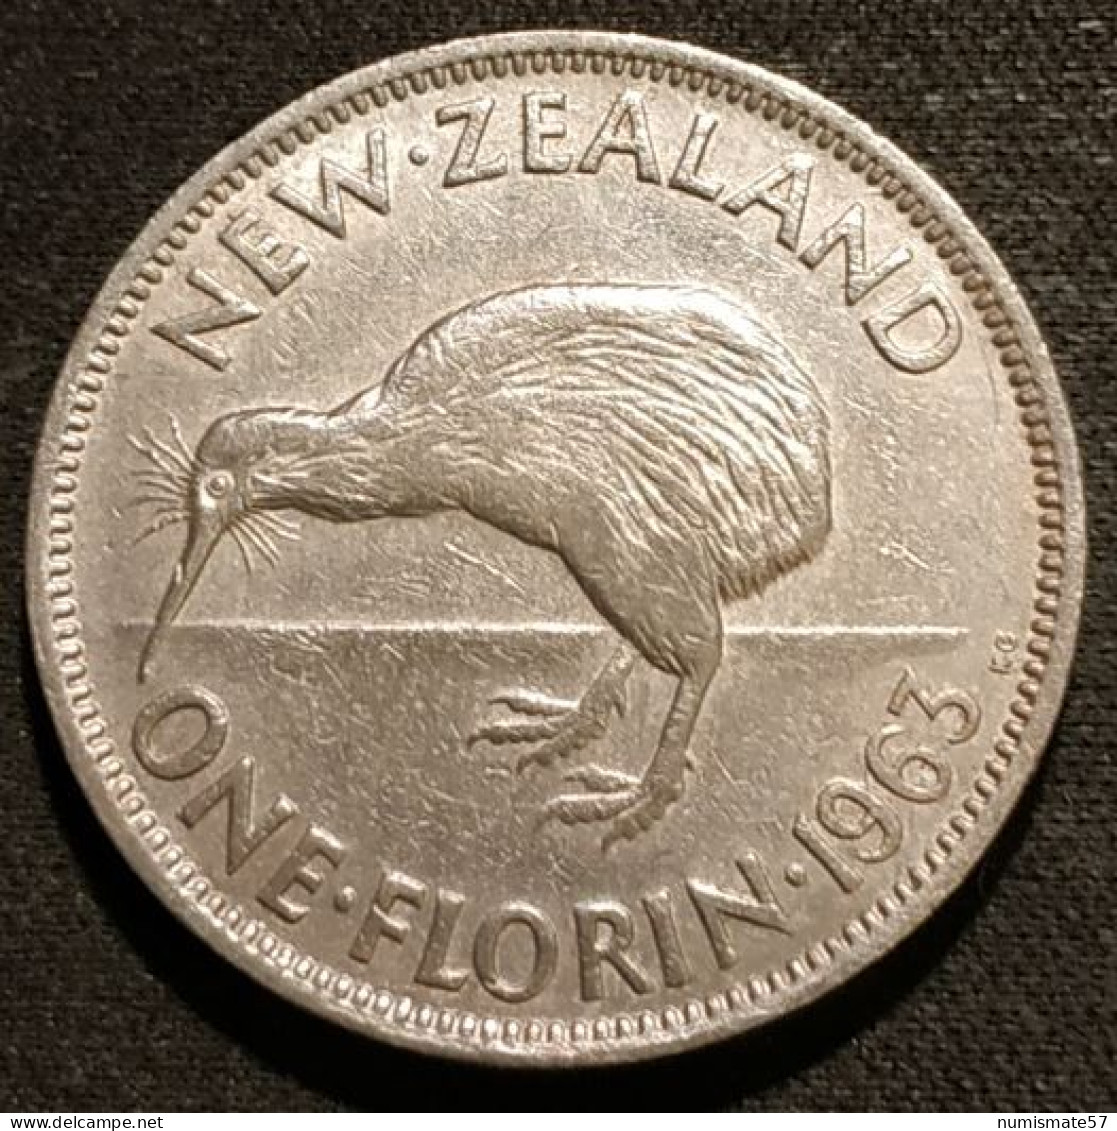 RARE - NOUVELLE ZELANDE - NEW ZEALAND - ONE - 1 FLORIN 1963 - Elisabeth II - KM 28.2 - Neuseeland